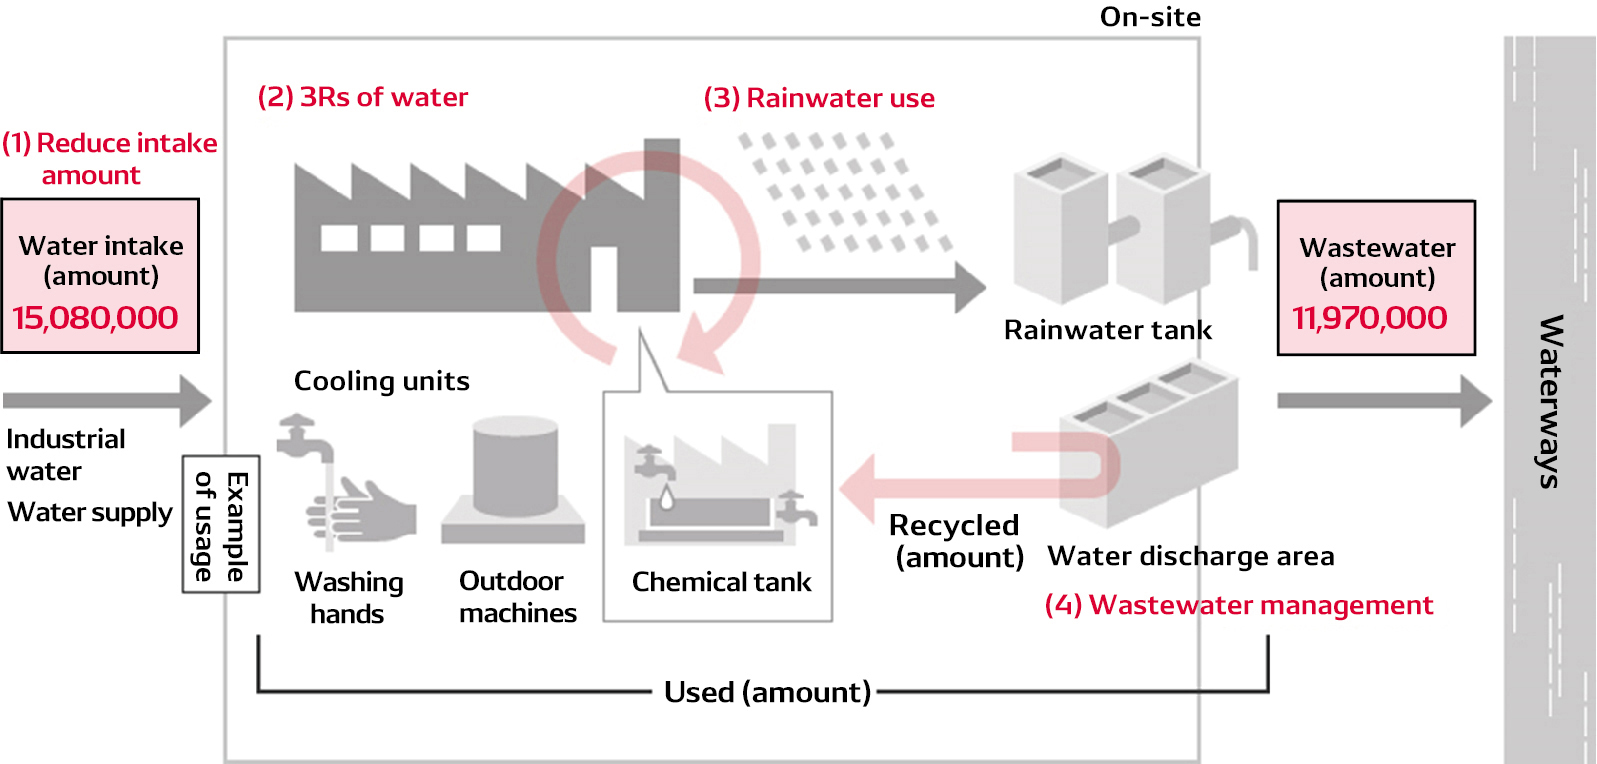 clean02-img-water-management-in-factories-en